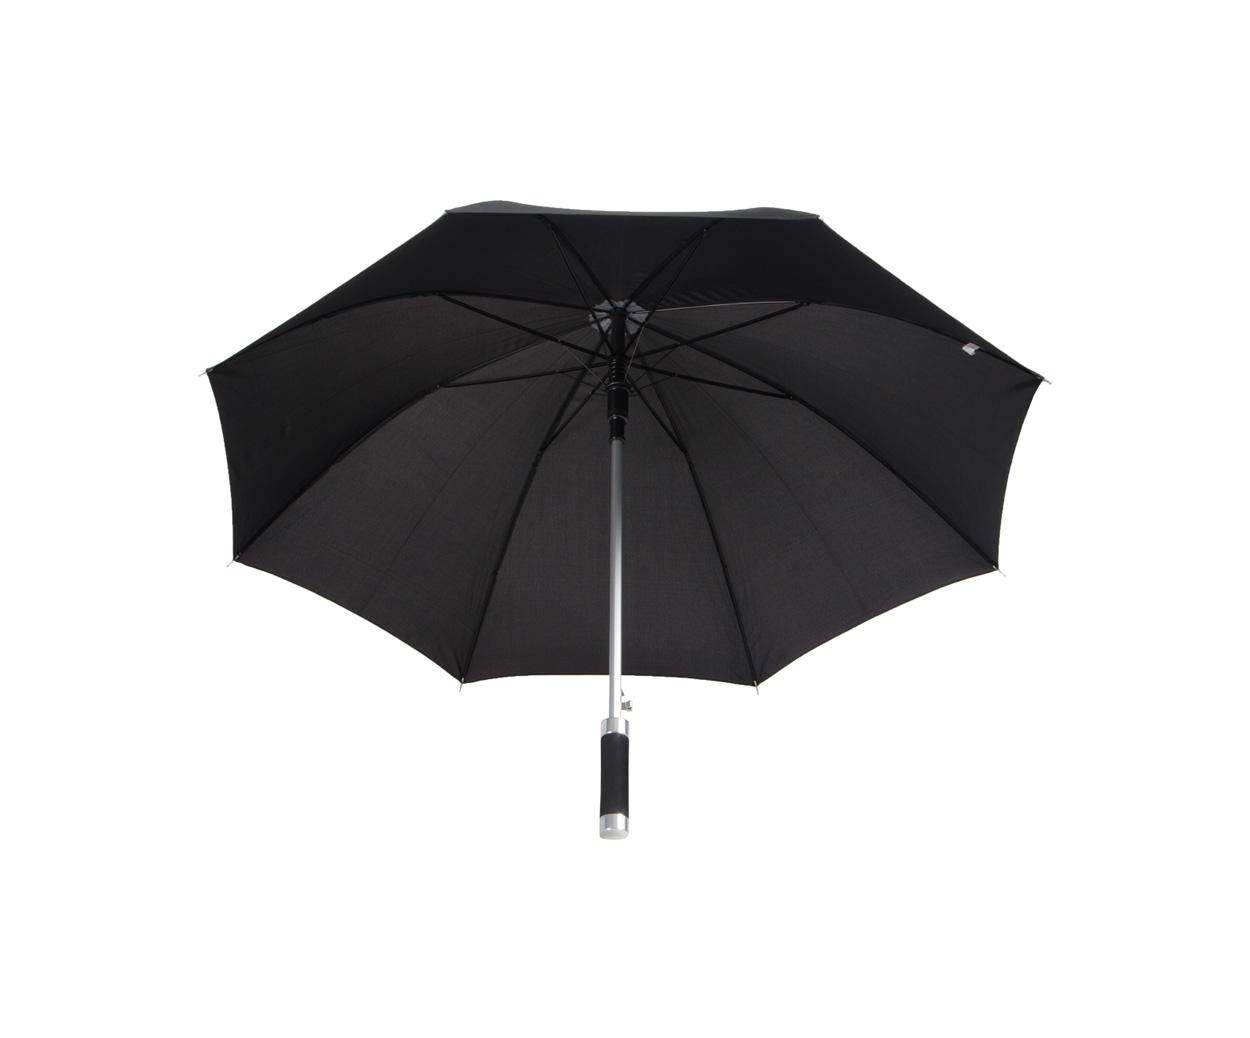 Nuages automatski kišobran, crne boje s tiskom 